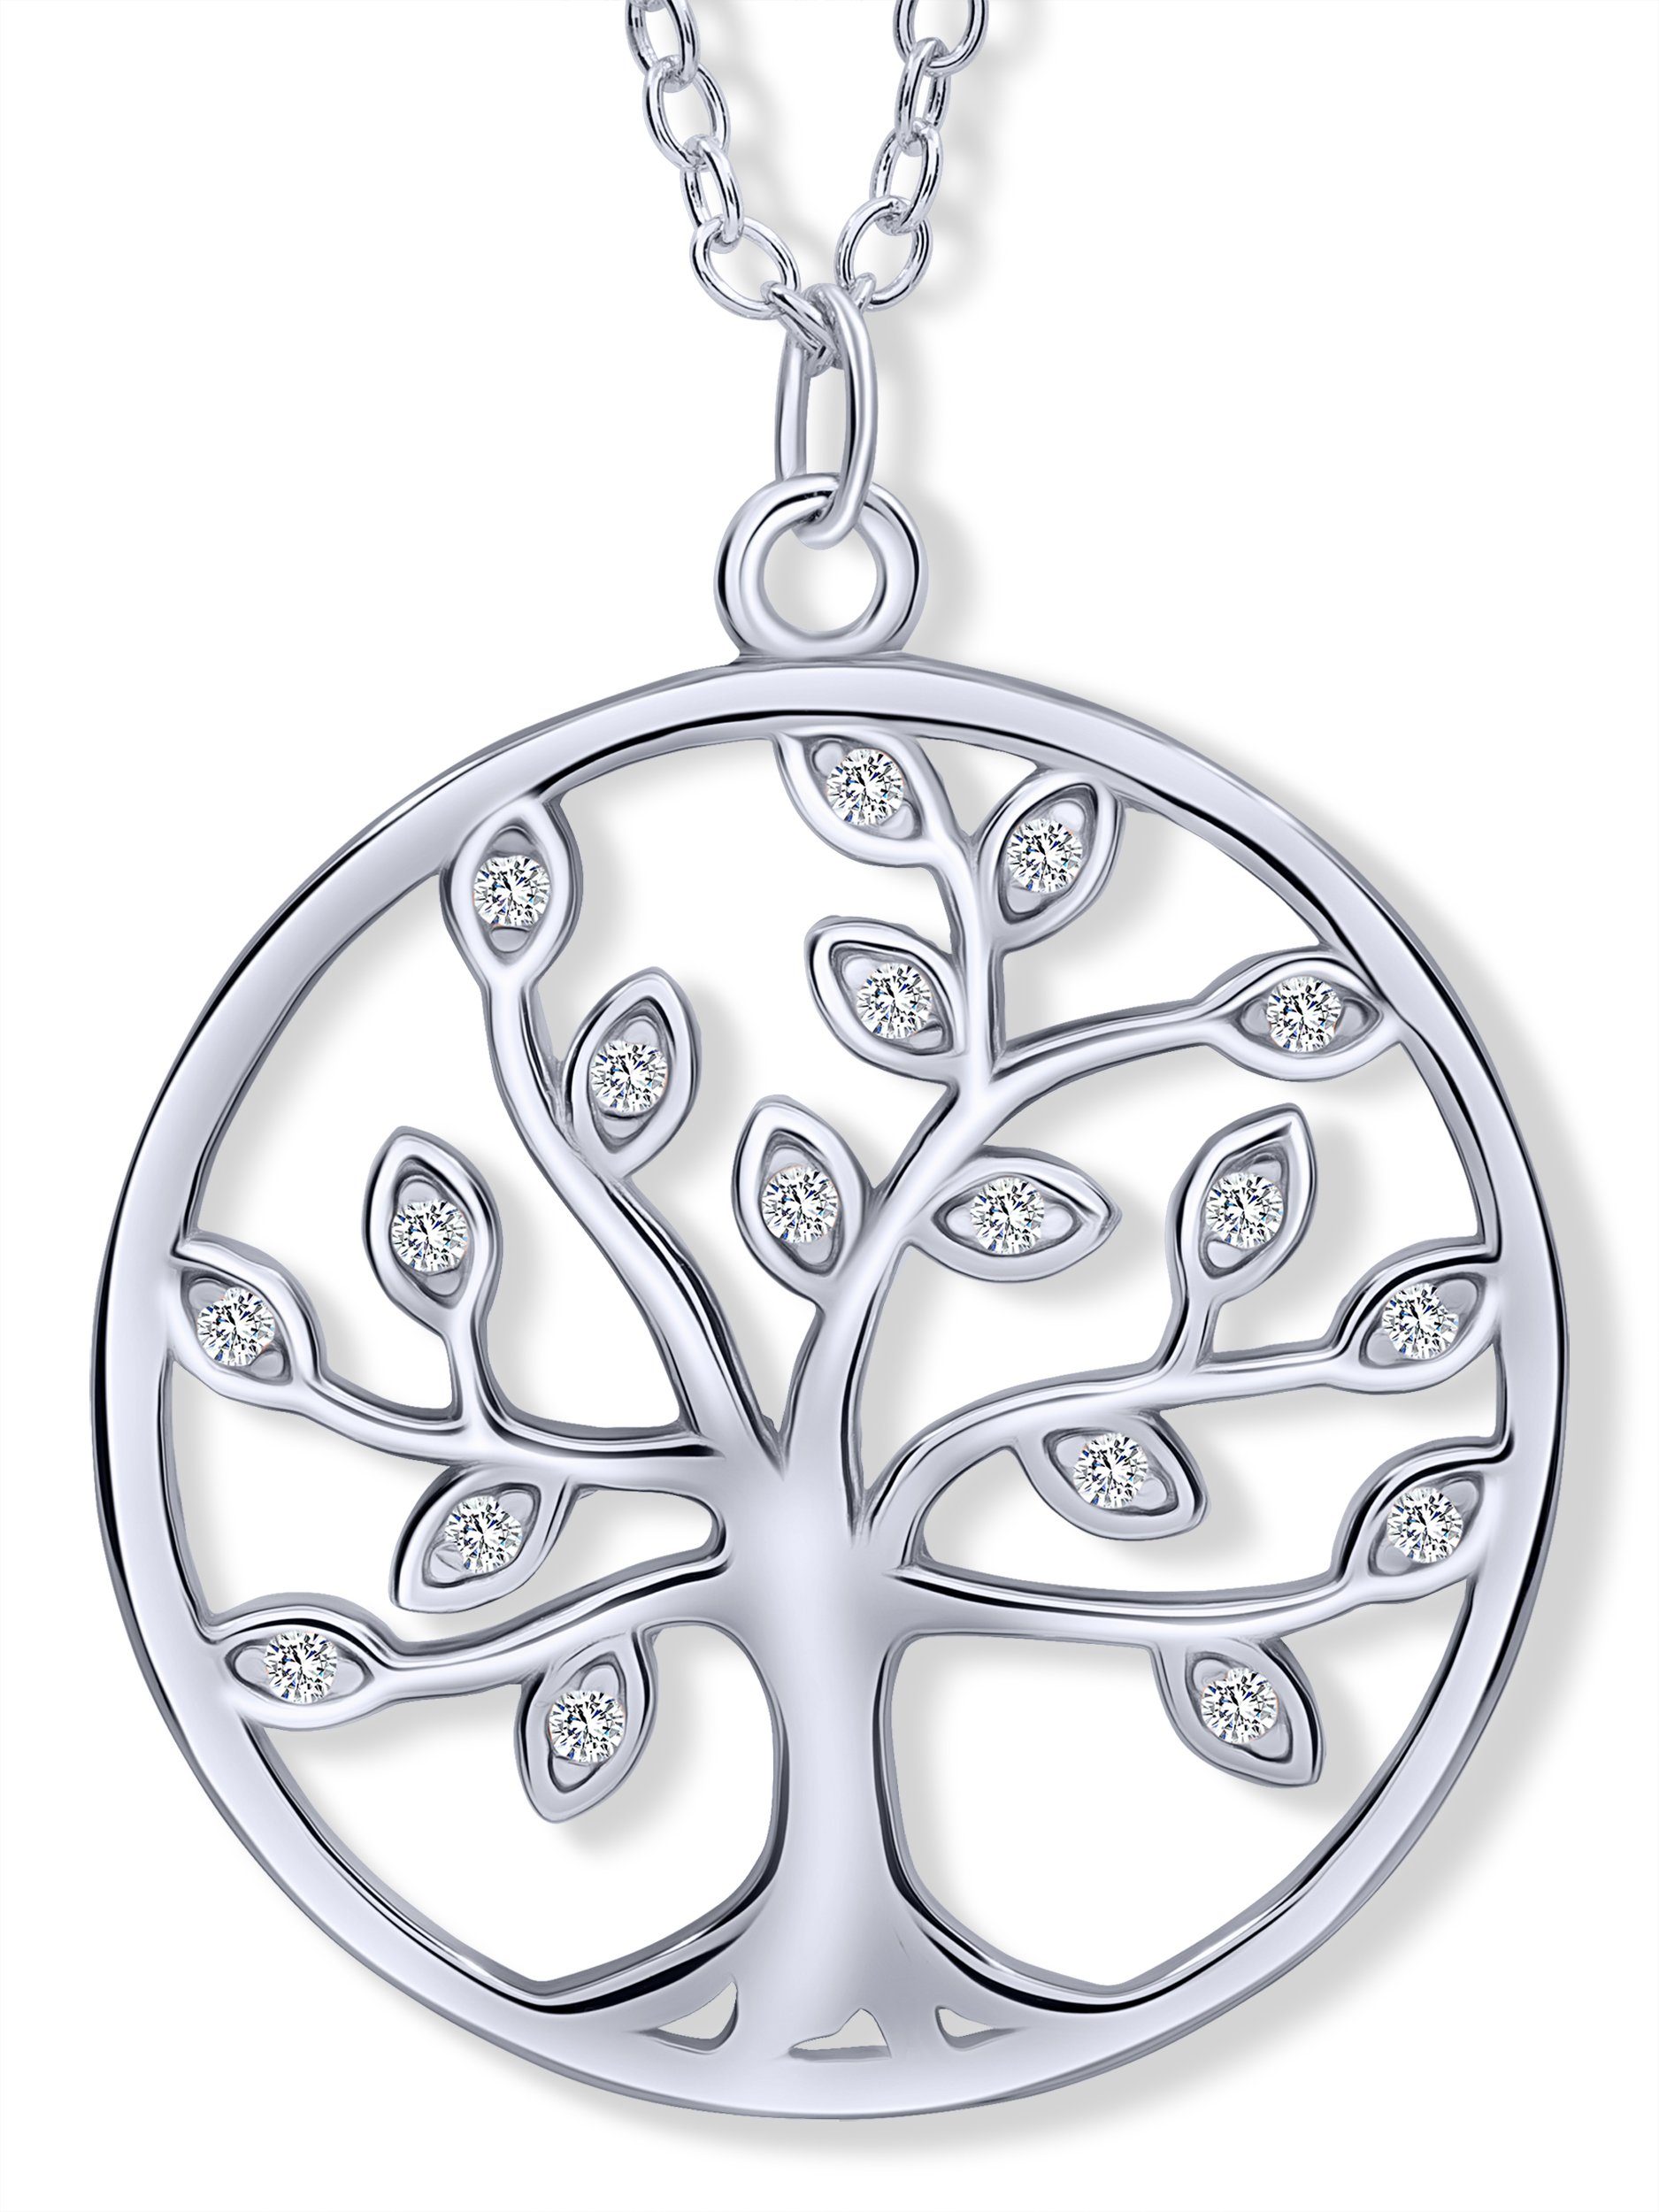 Life Lebens Baum Anhänger of mit des Halskette Lebensbaum I stahlender Zertifikat, Kette mit VIASOUL Glanz Silber I Tree